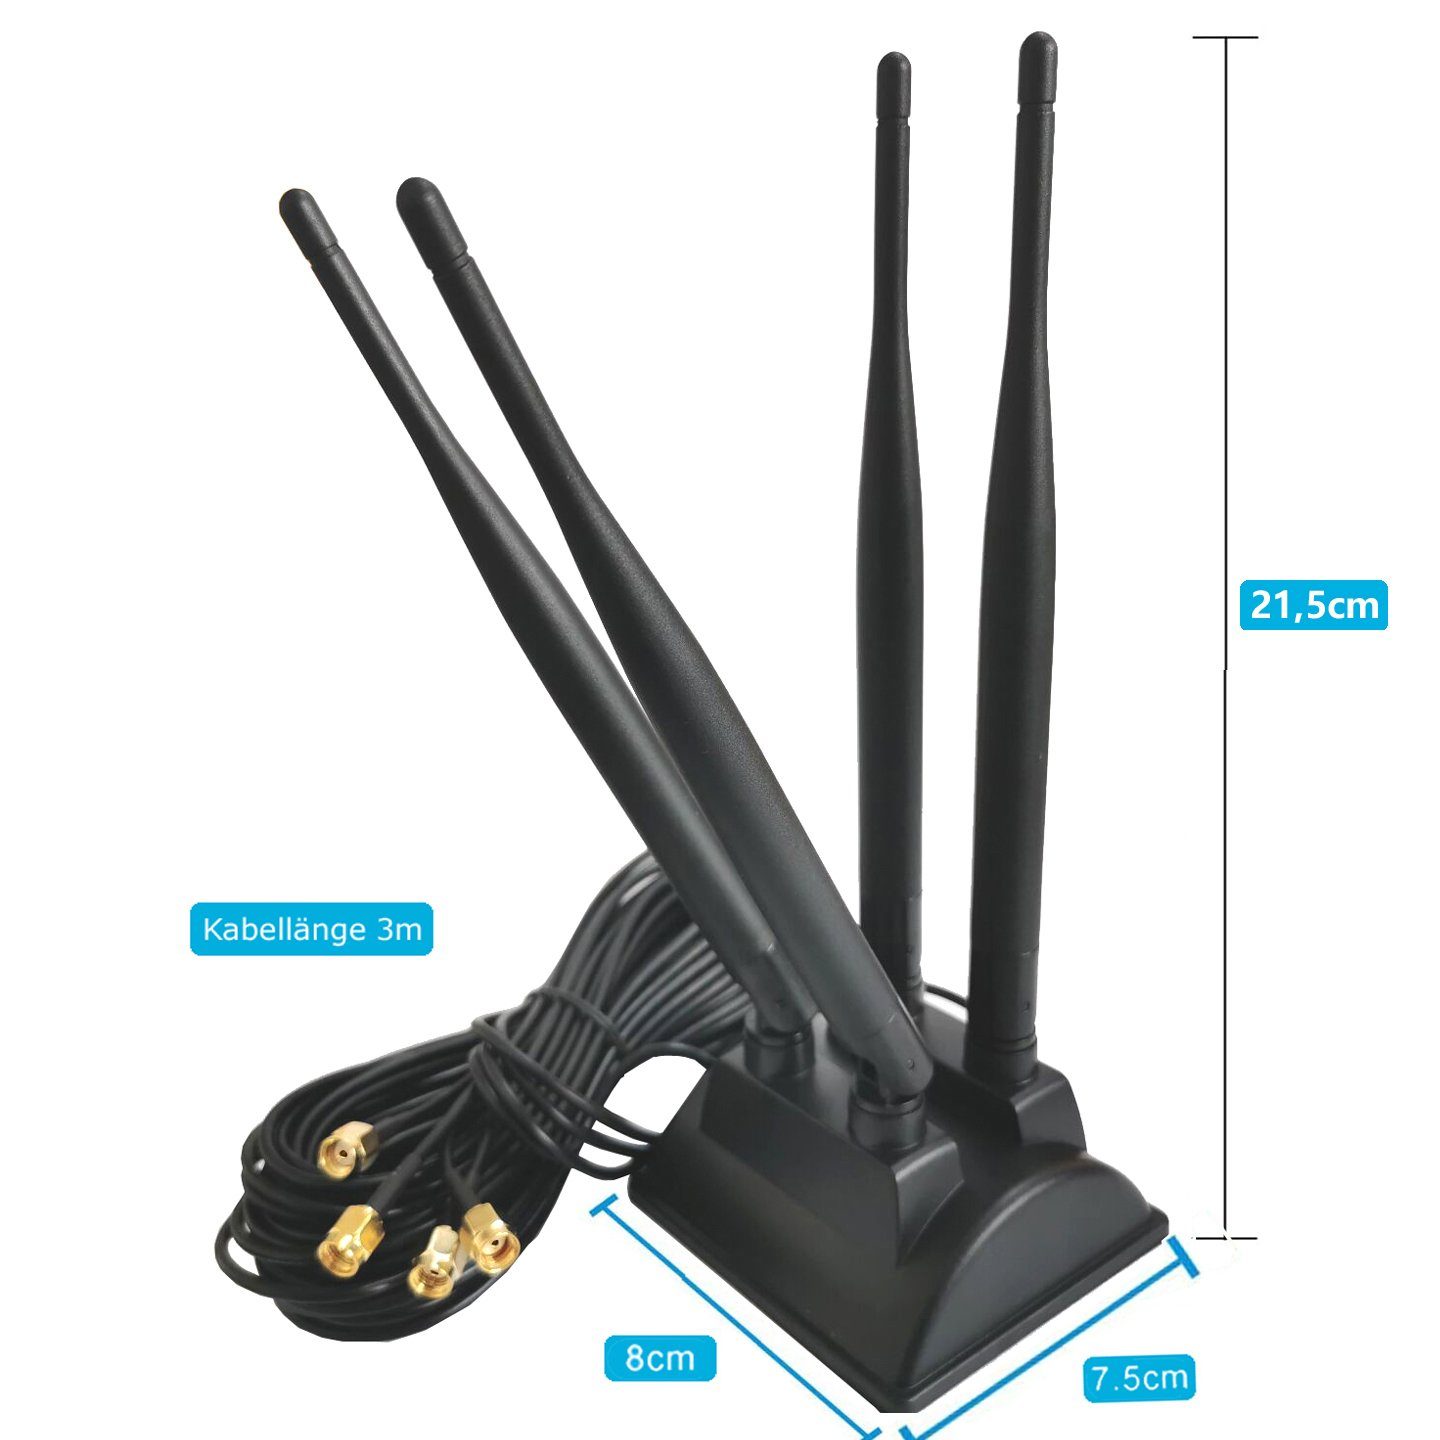 Bolwins I03D 3m 2.4G 5.8G WLAN-Antenne RP-SMA Standfuss Kabel 6dBi 4x Antenne WiFi Adapter